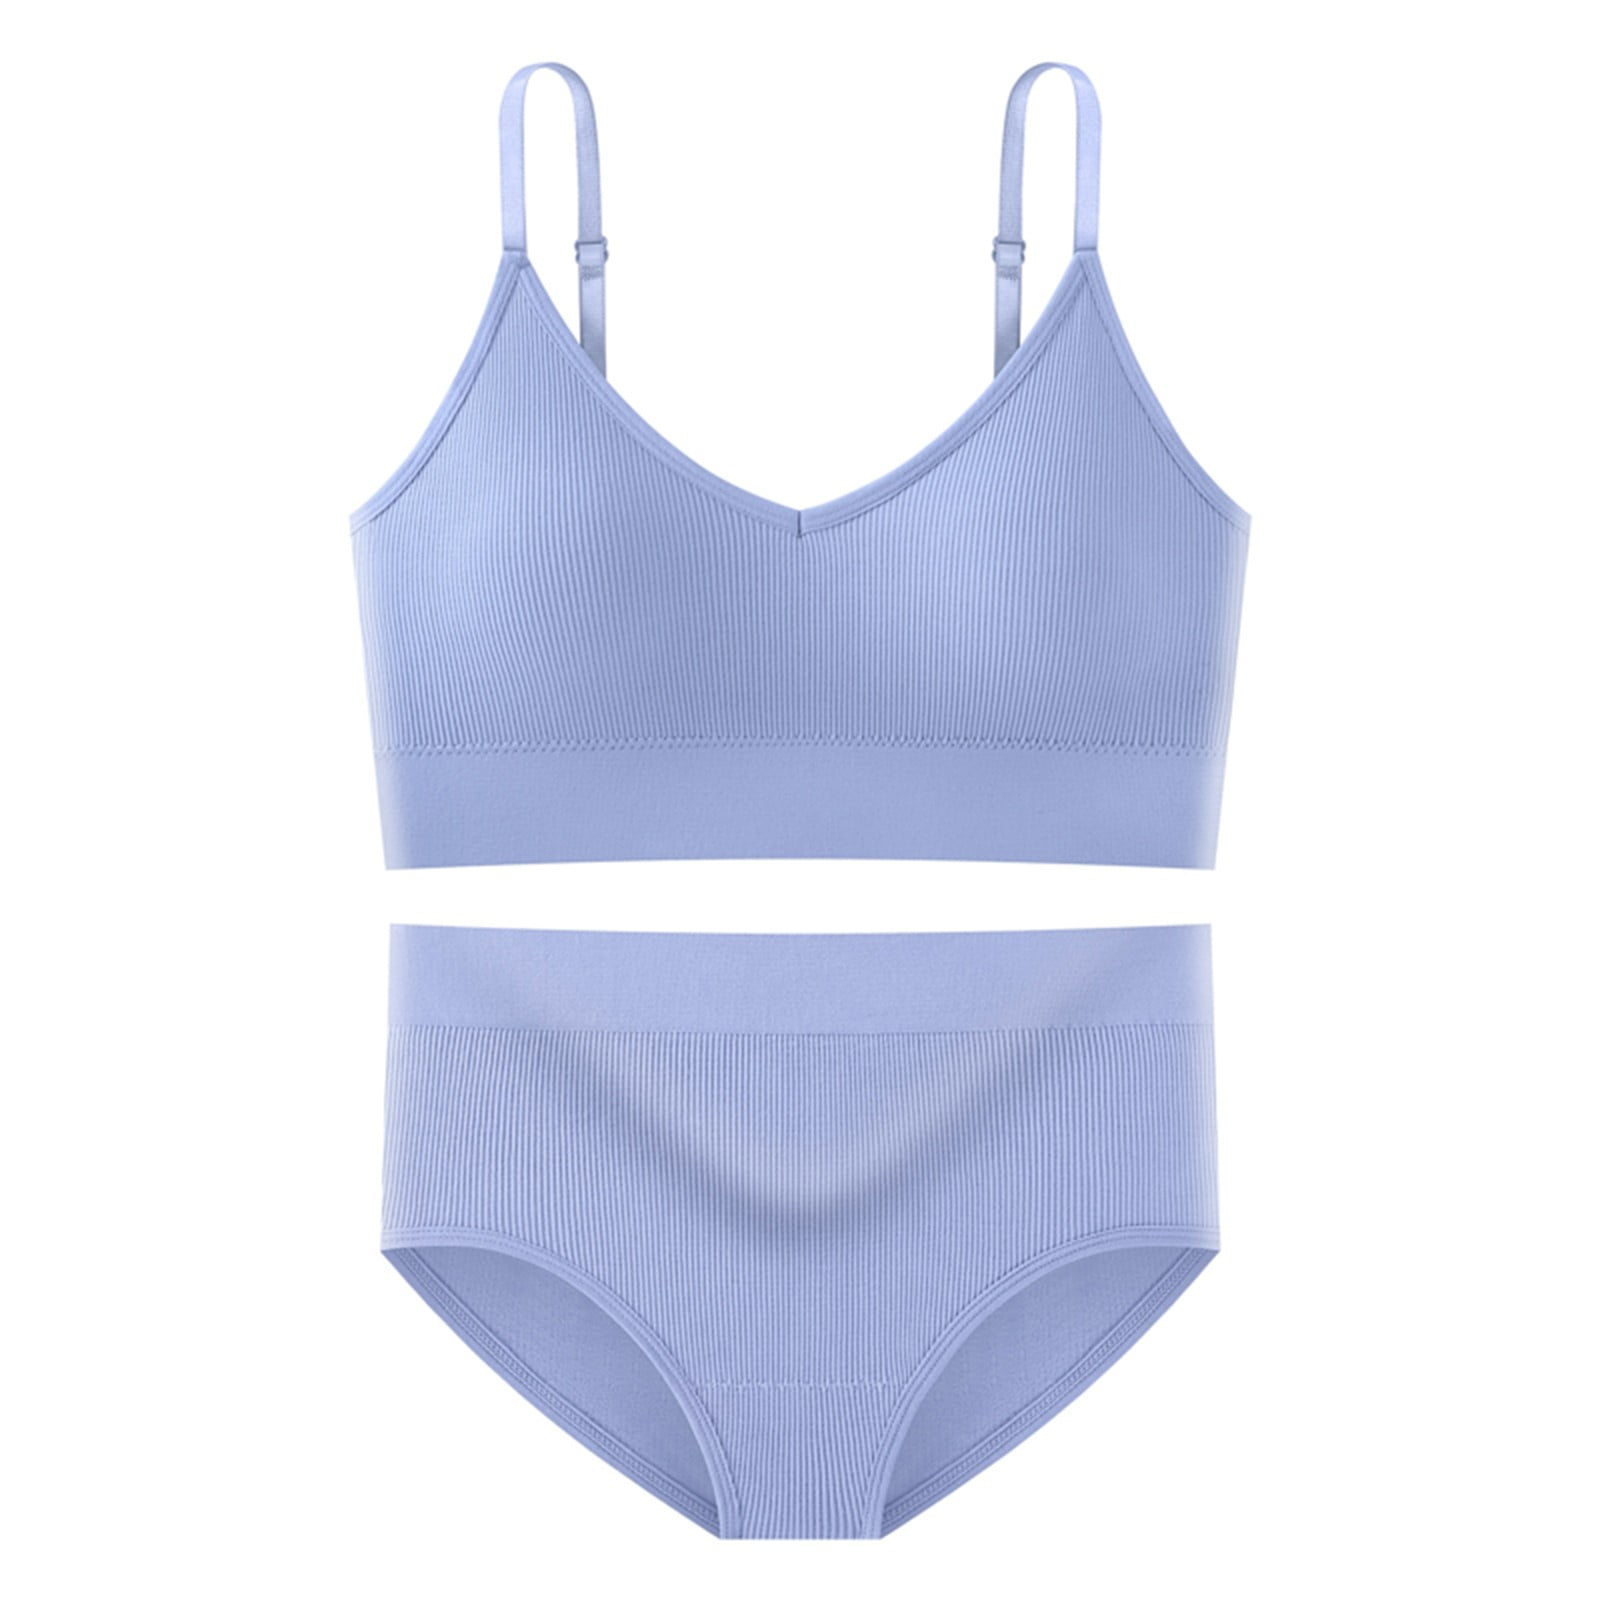 adviicd Underwear Women Pack Strappy Lingerie for Women, Crisscross Bra Set  Matching Bra and Panty Sets Sky Blue One Size